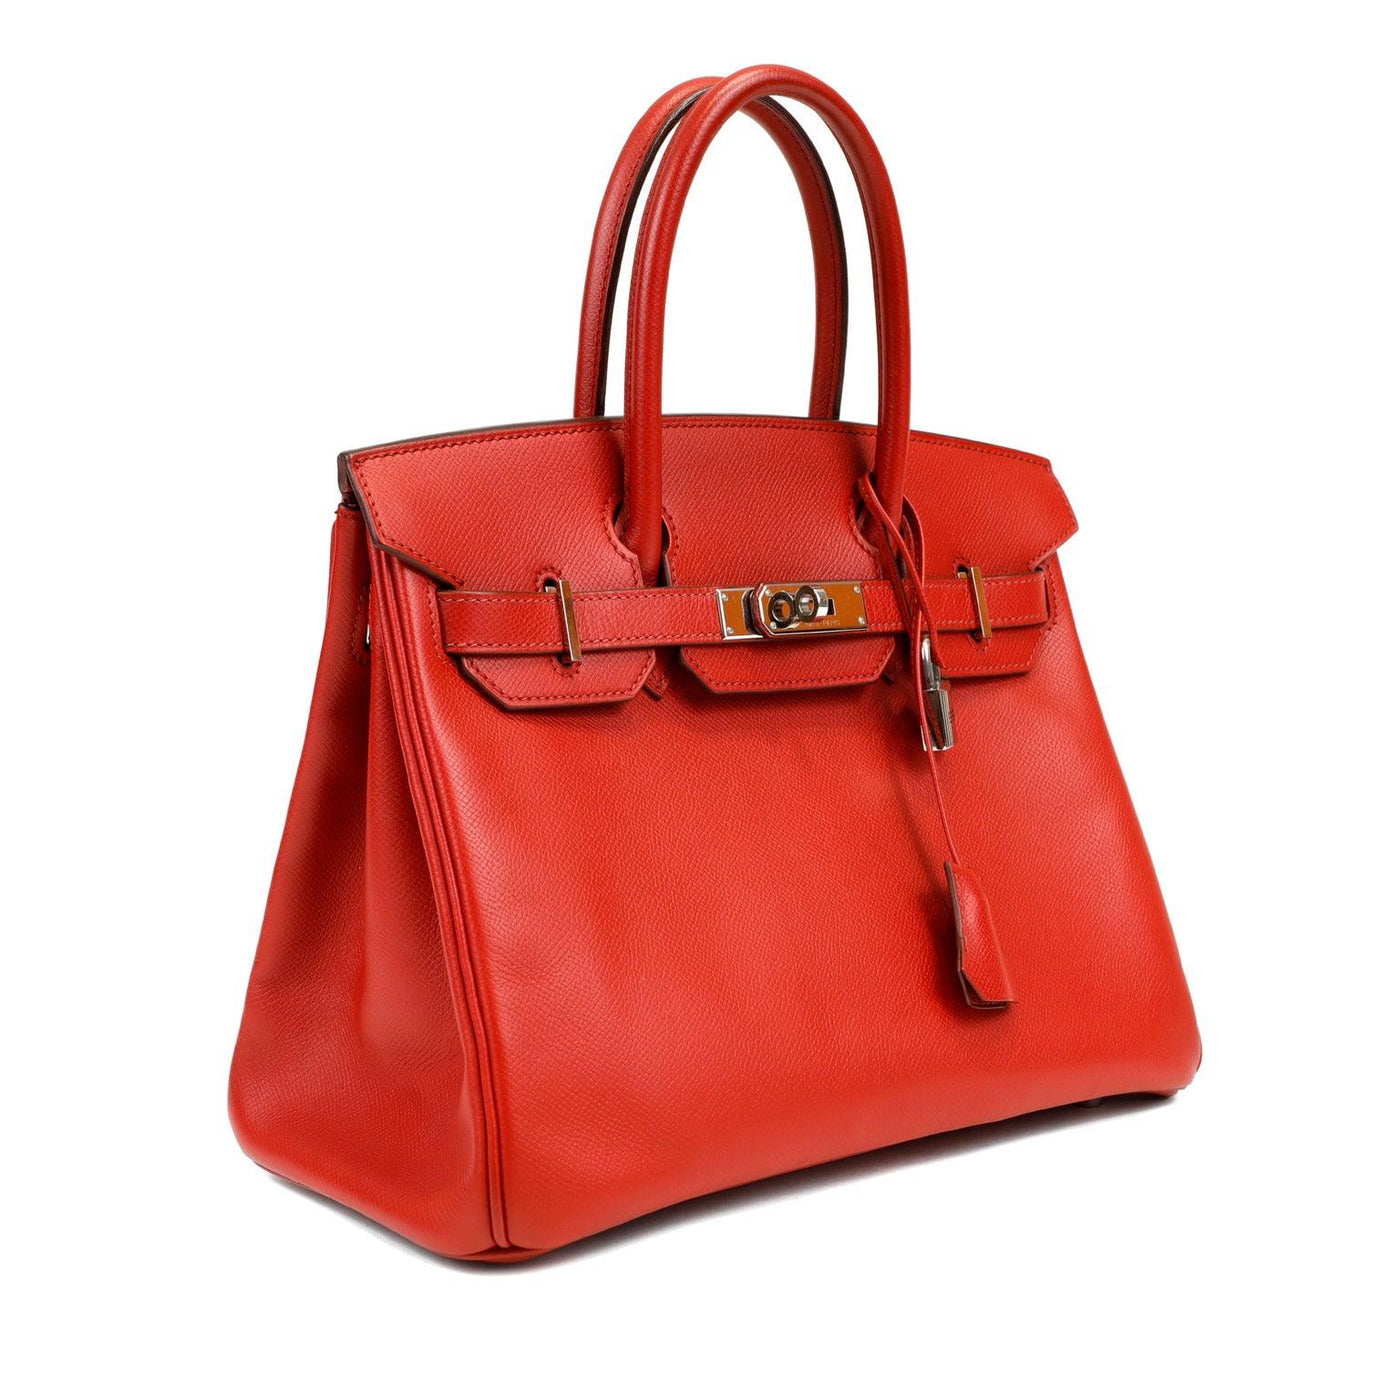 Hermès 30cm Vivid Red Epsom Leather Birkin - Only Authentics